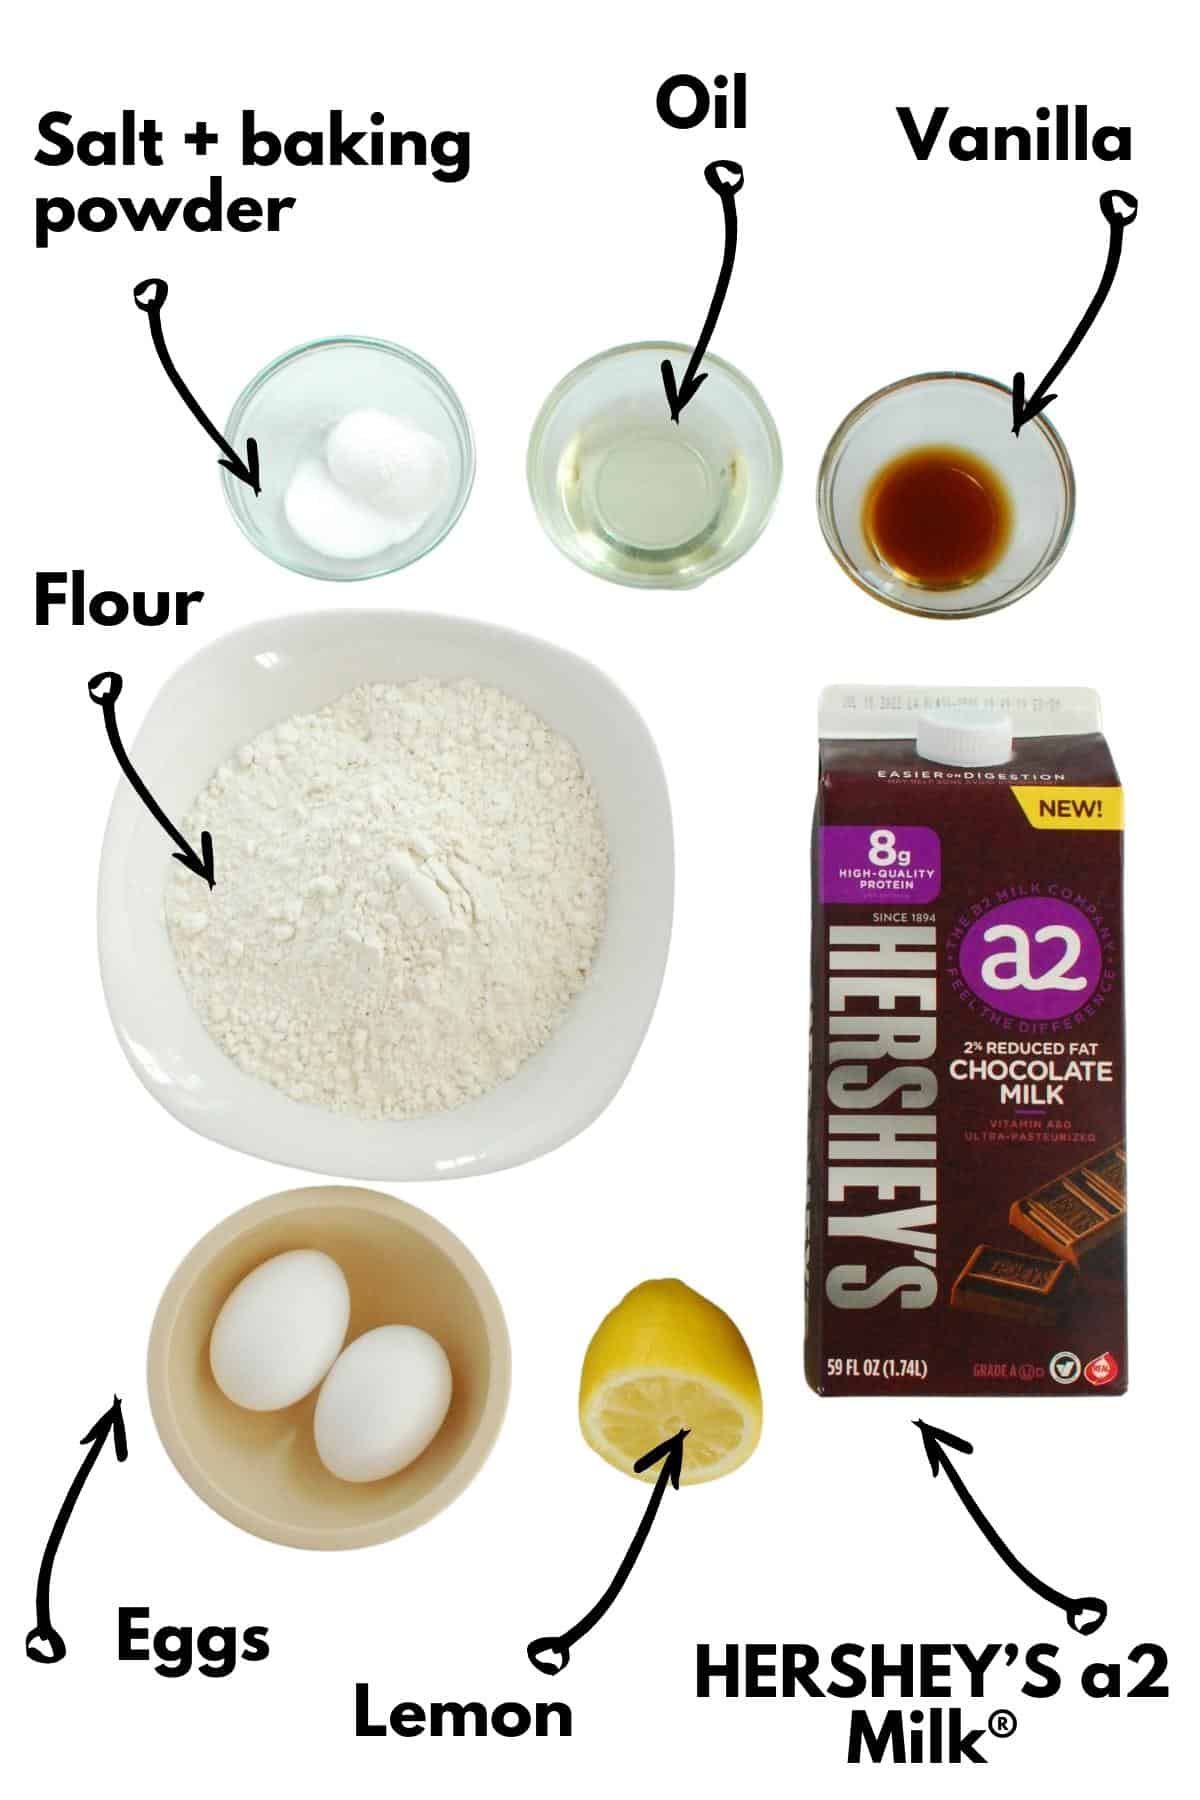 Salt, baking powder, oil, vanilla, flour, eggs, lemon, and chocolate milk.